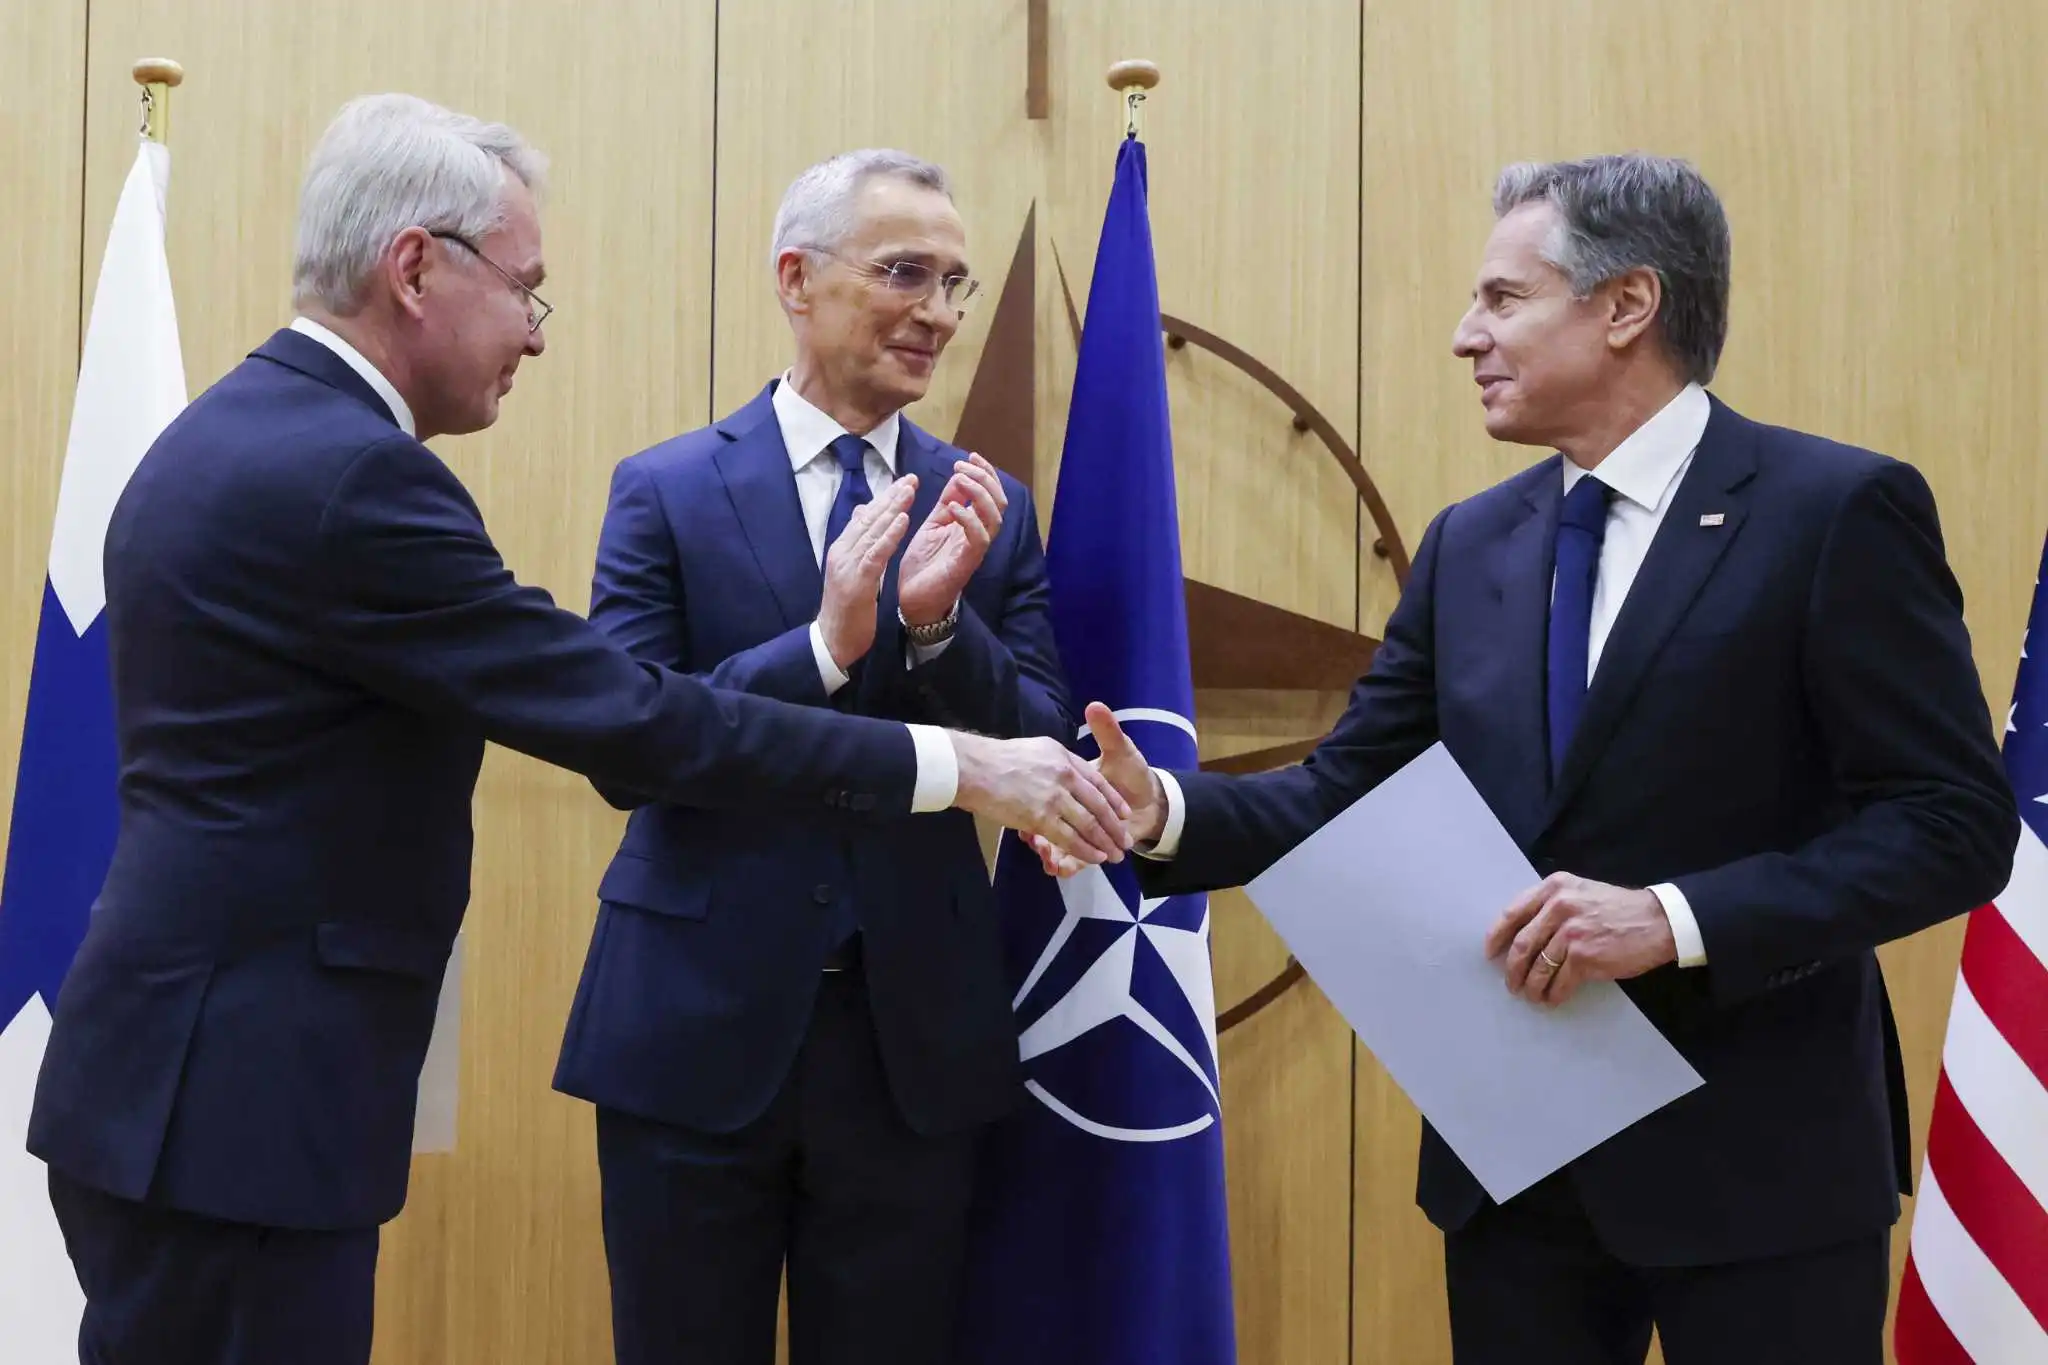 Fineland Joins NATO